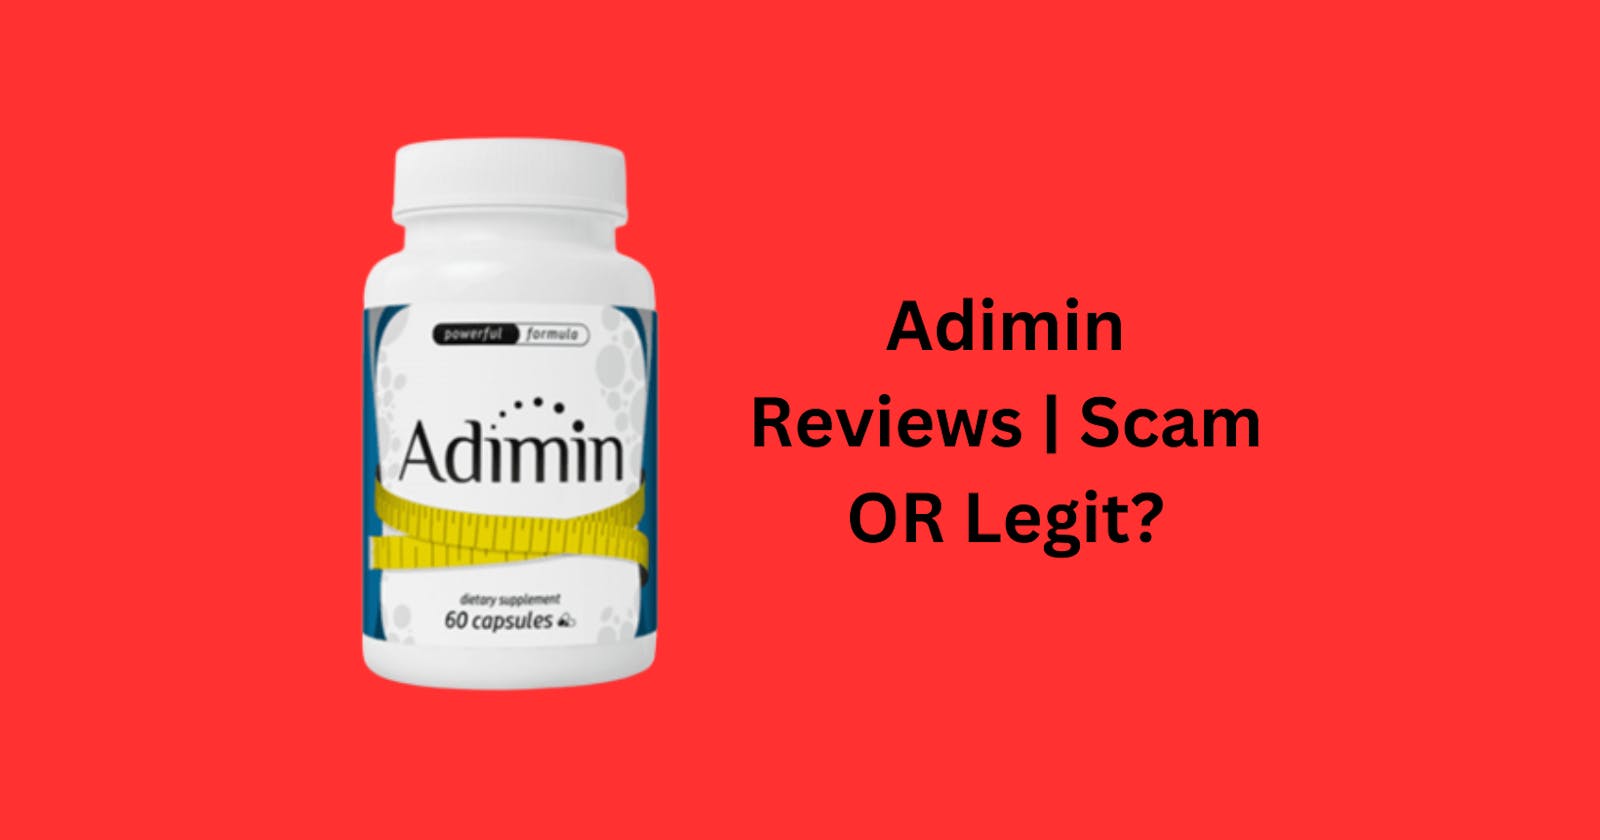 Adimin Reviews ⚠️ SCAM OR LEGIT?